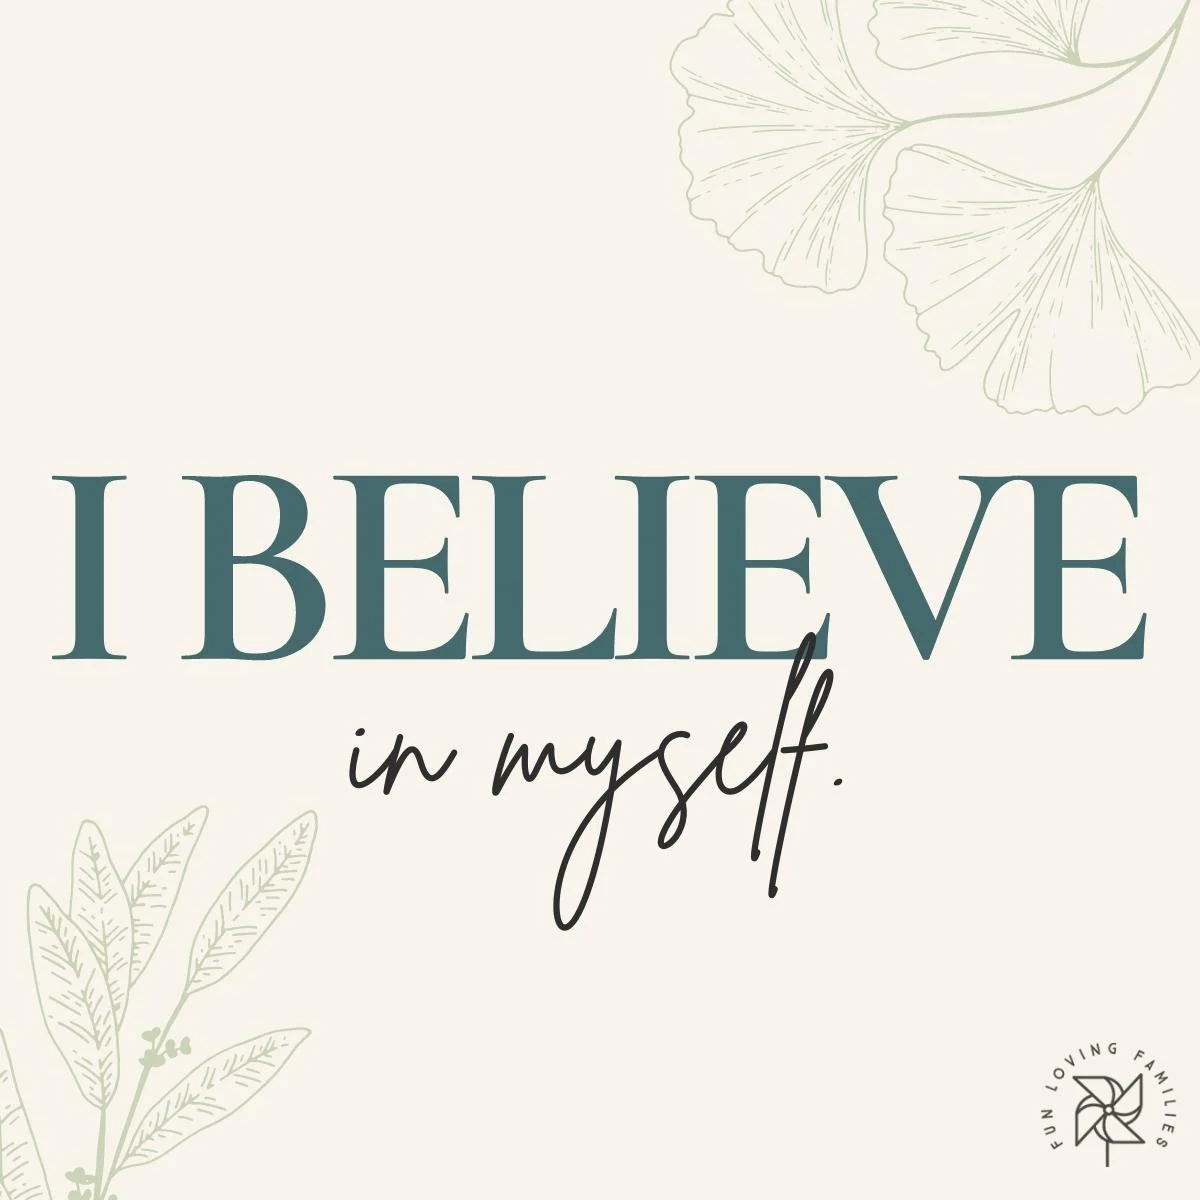 I believe in myself affirmation